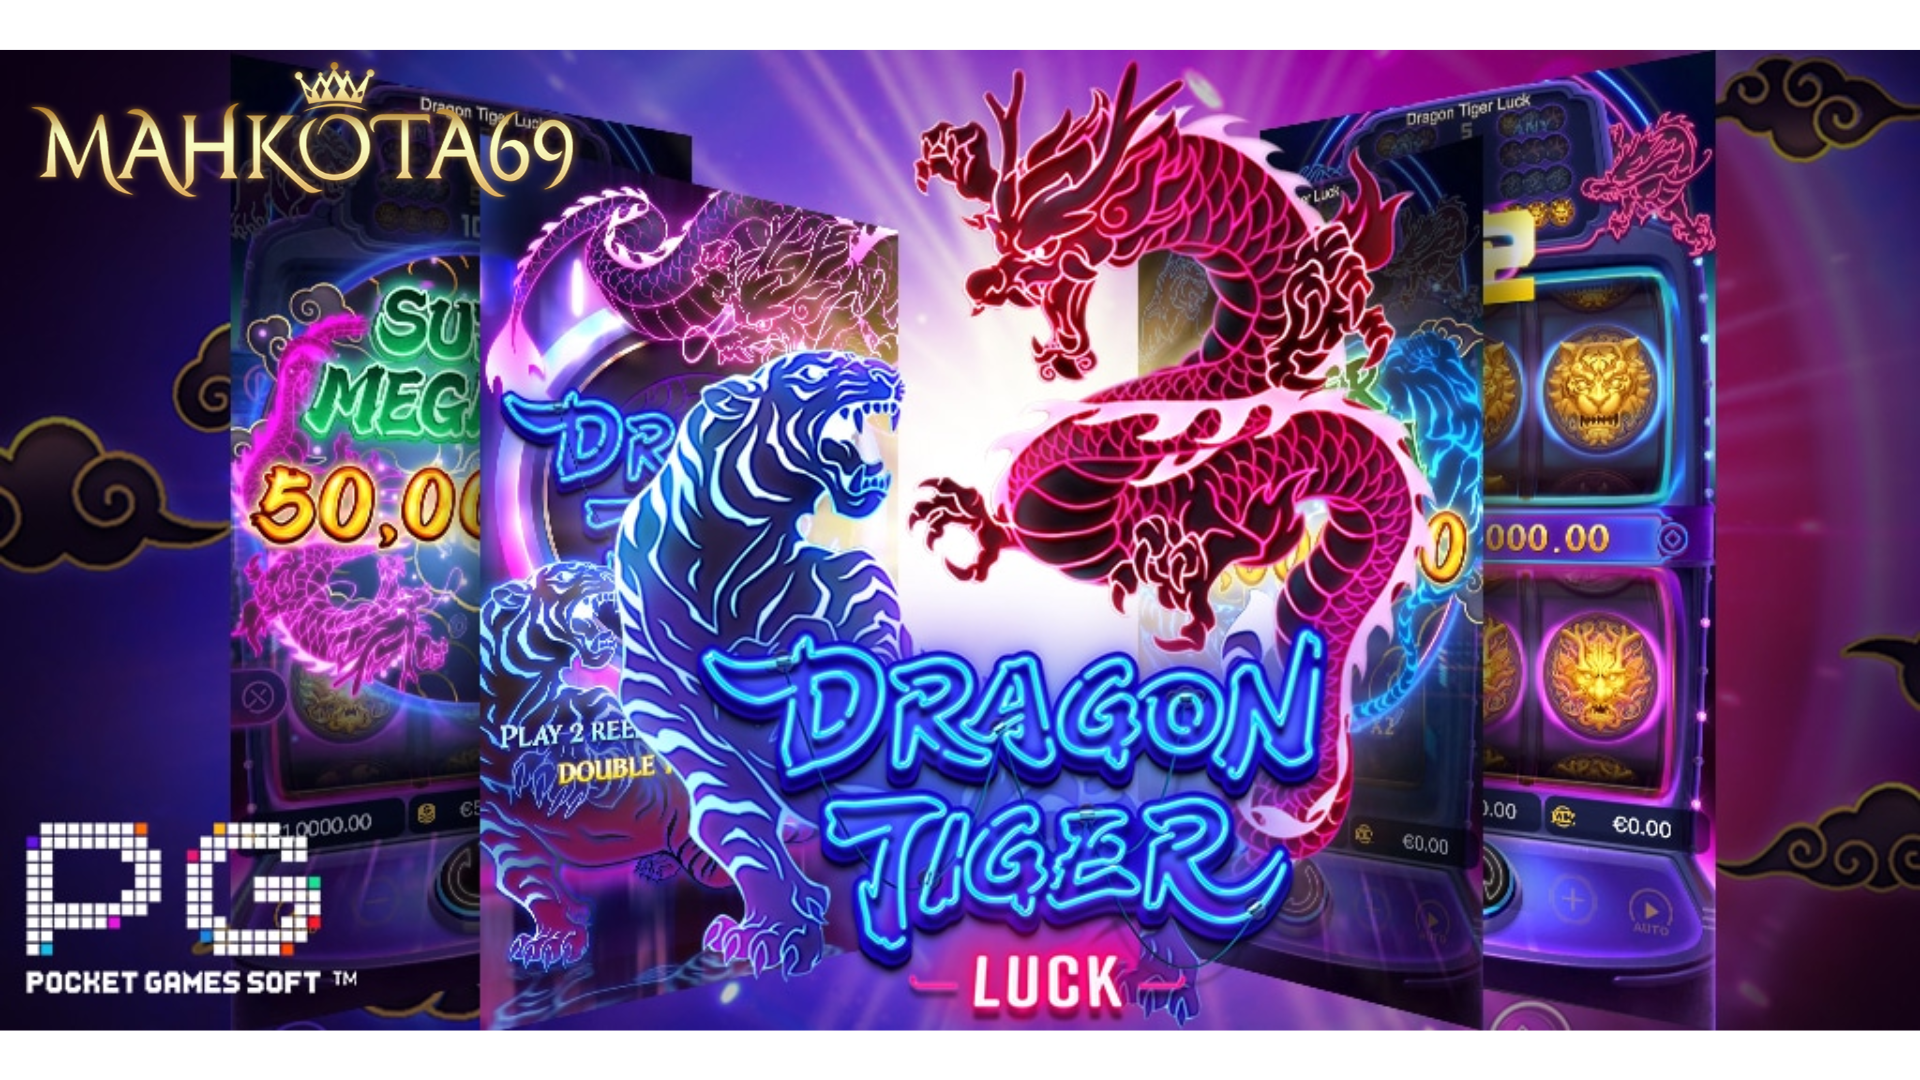 Dragon Tiger Luck Mahkota69